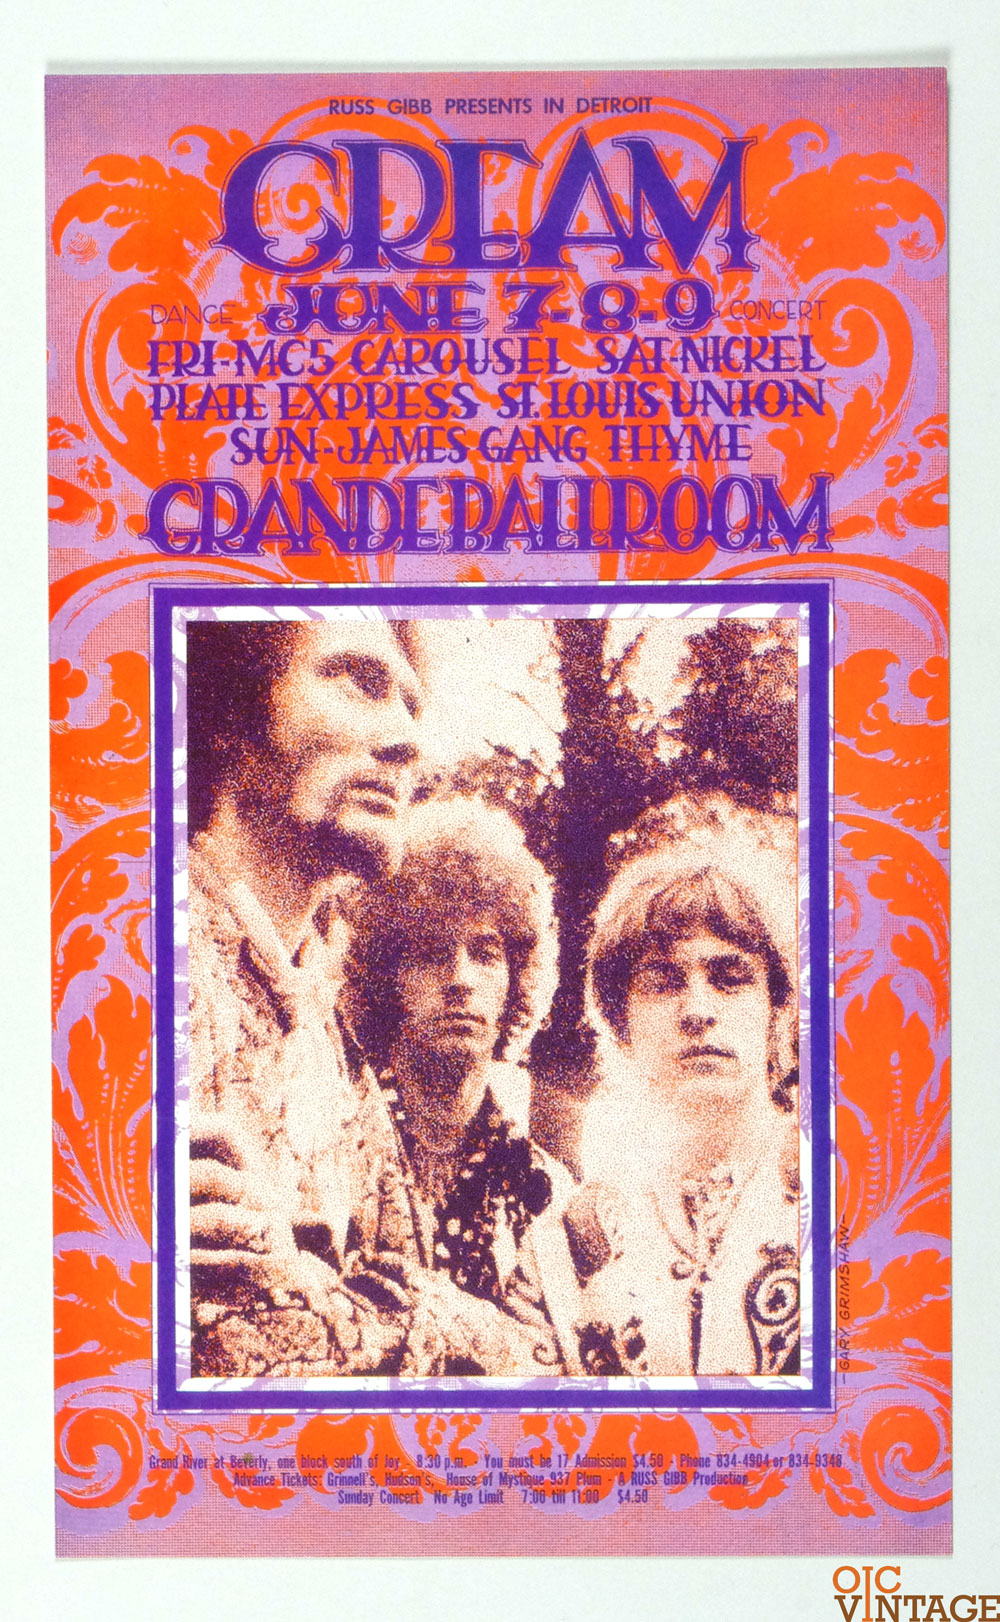 Cream Poster 1968 Grande Ballroom Gary Grimshaw 2nd Printing R2005